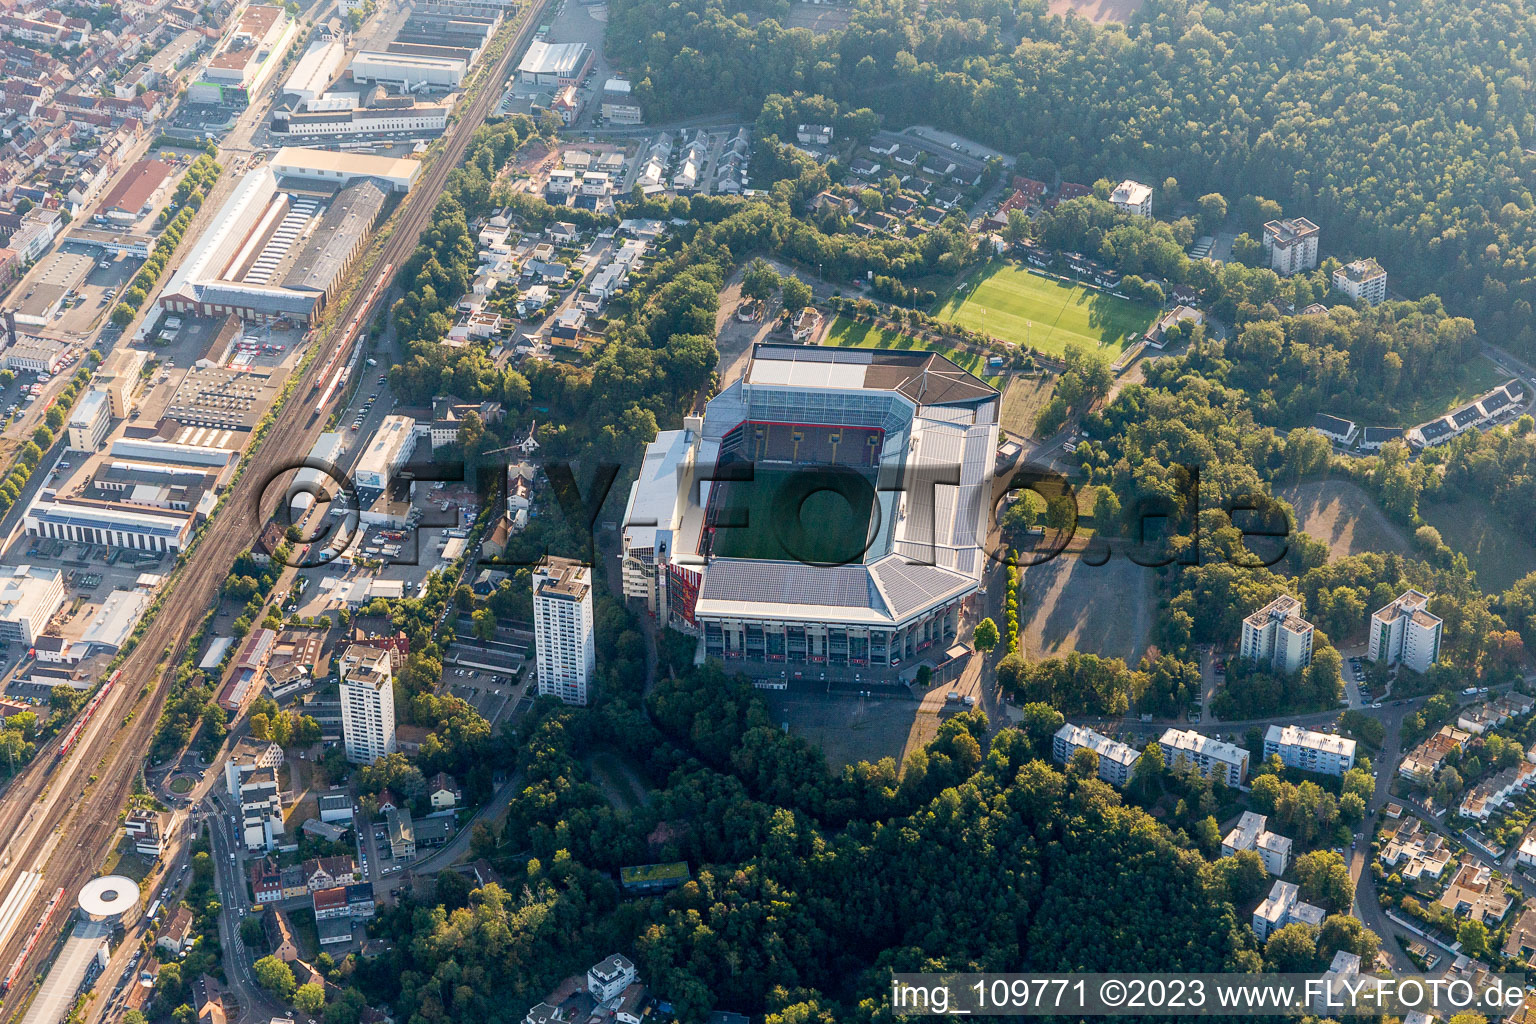 Fritz-Walter Stadium of the FCK on the Betzenberg in Kaiserslautern in the state Rhineland-Palatinate, Germany